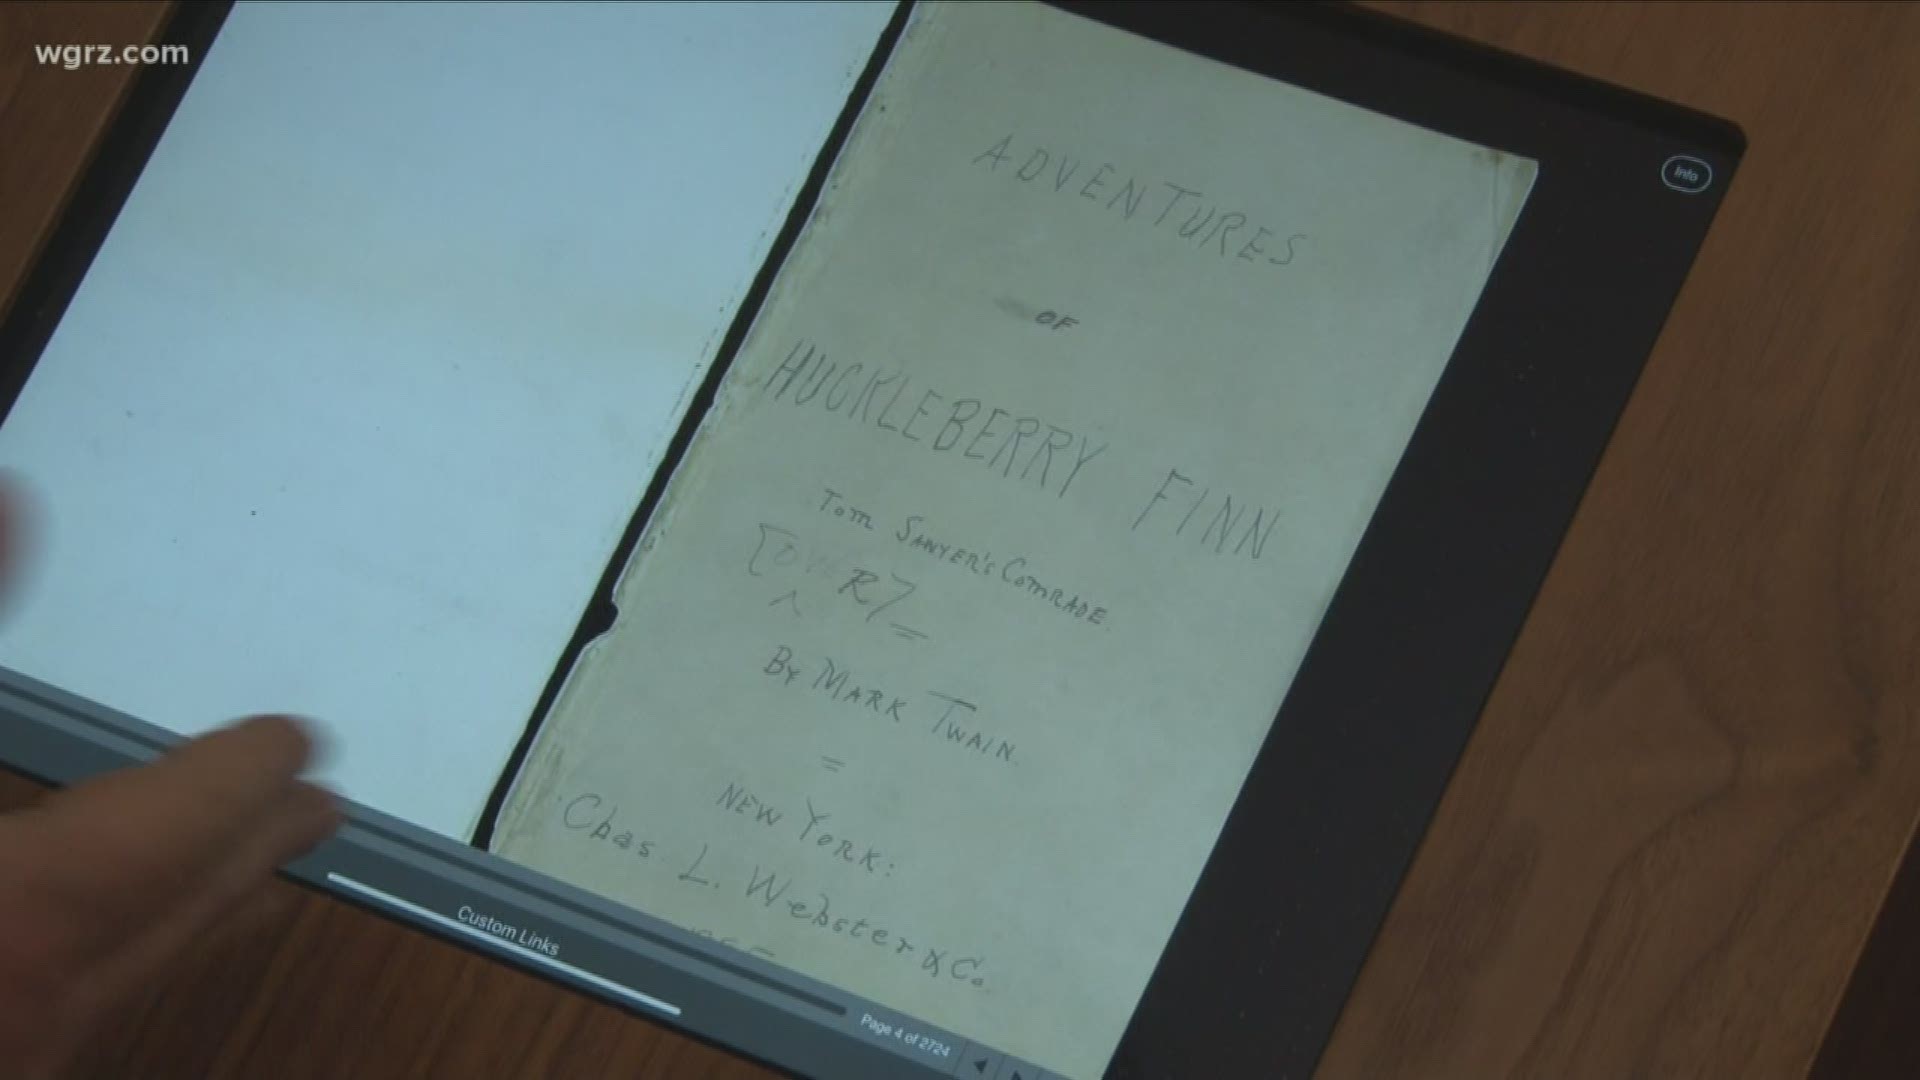 Buffalo's downtown library branch is home to Mark Twain's original handwritten manuscript of Huckleberry Finn